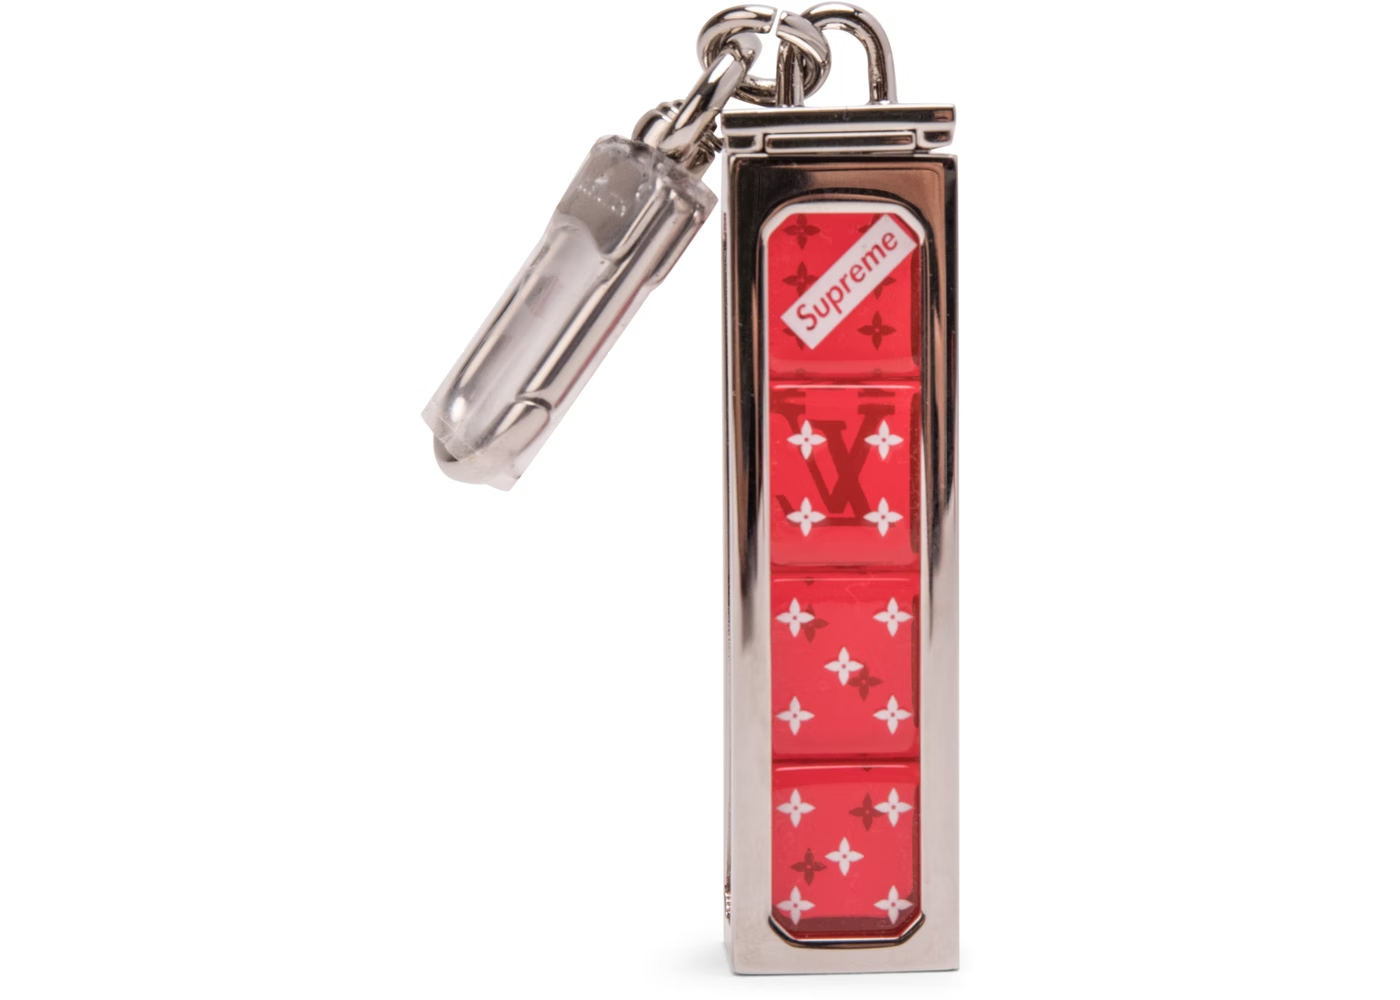 Louis Vuitton x Supreme Ultra Rare FW17 Red Supreme Box Logo Dice Key Chain